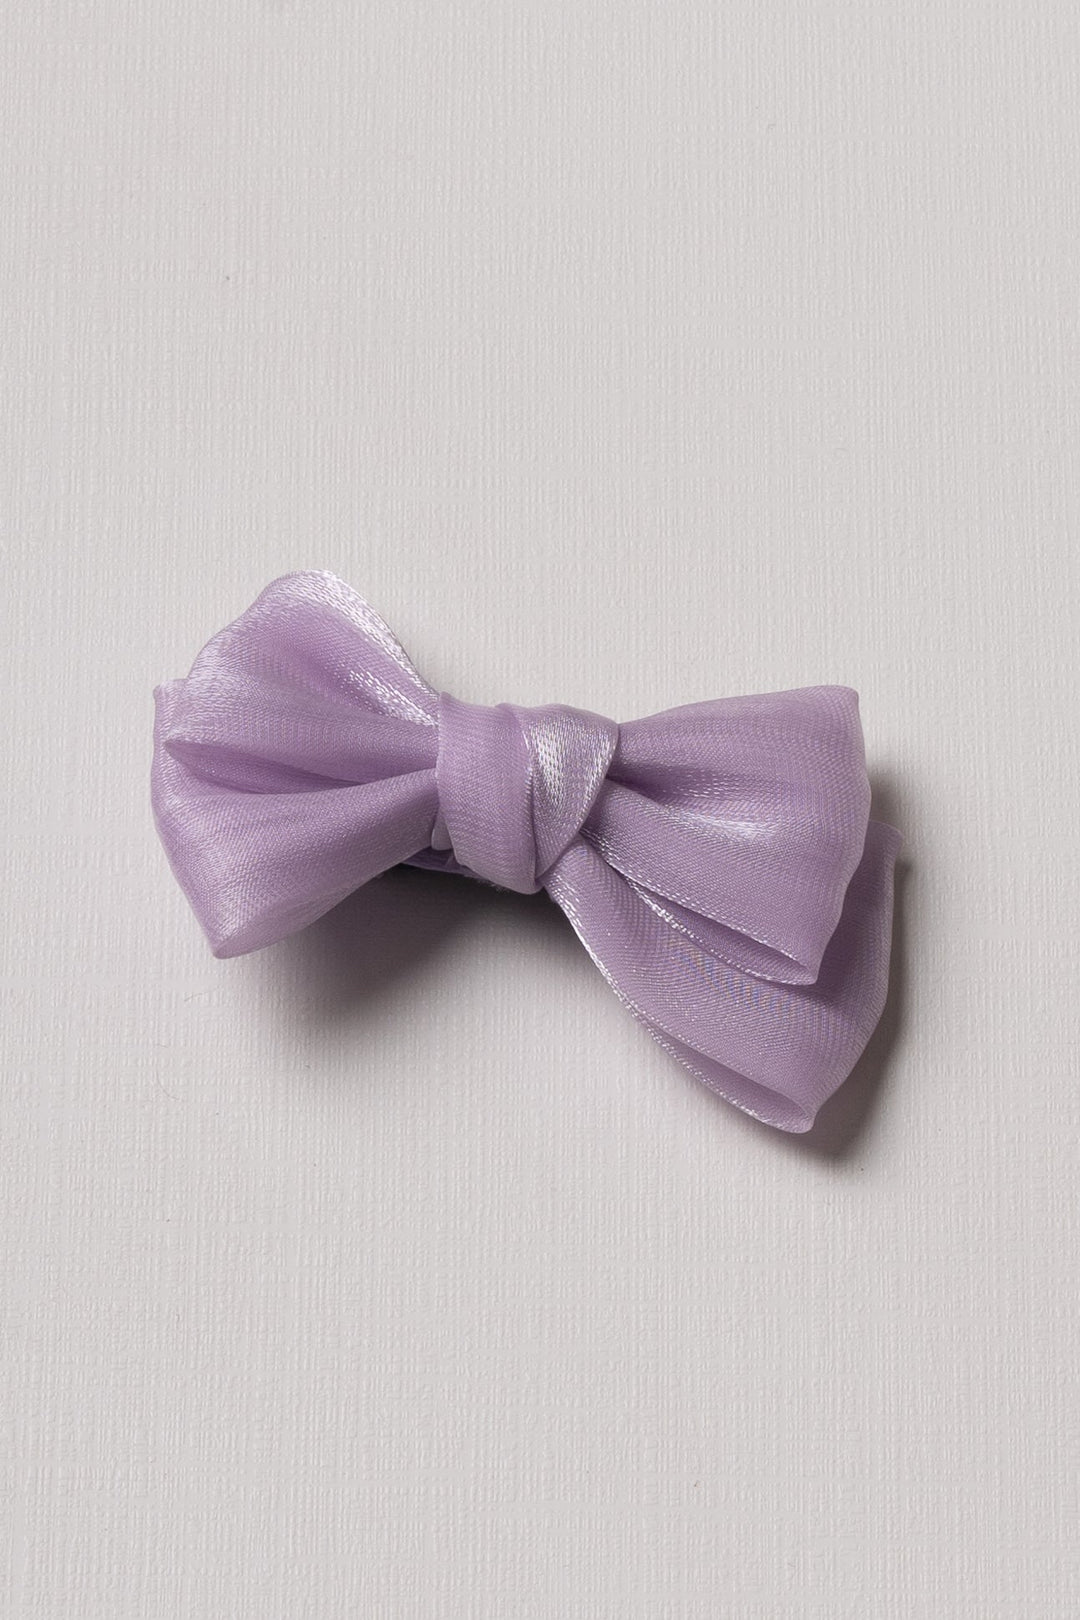 The Nesavu Hair Clip Lilac Dreams: Delicate Purple Bow Clip for Girls Nesavu Purple JHCL77K Charming Lilac Purple Bow Hair Clip for Girls | Perfect Accessory for Every Occasion | The Nesavu